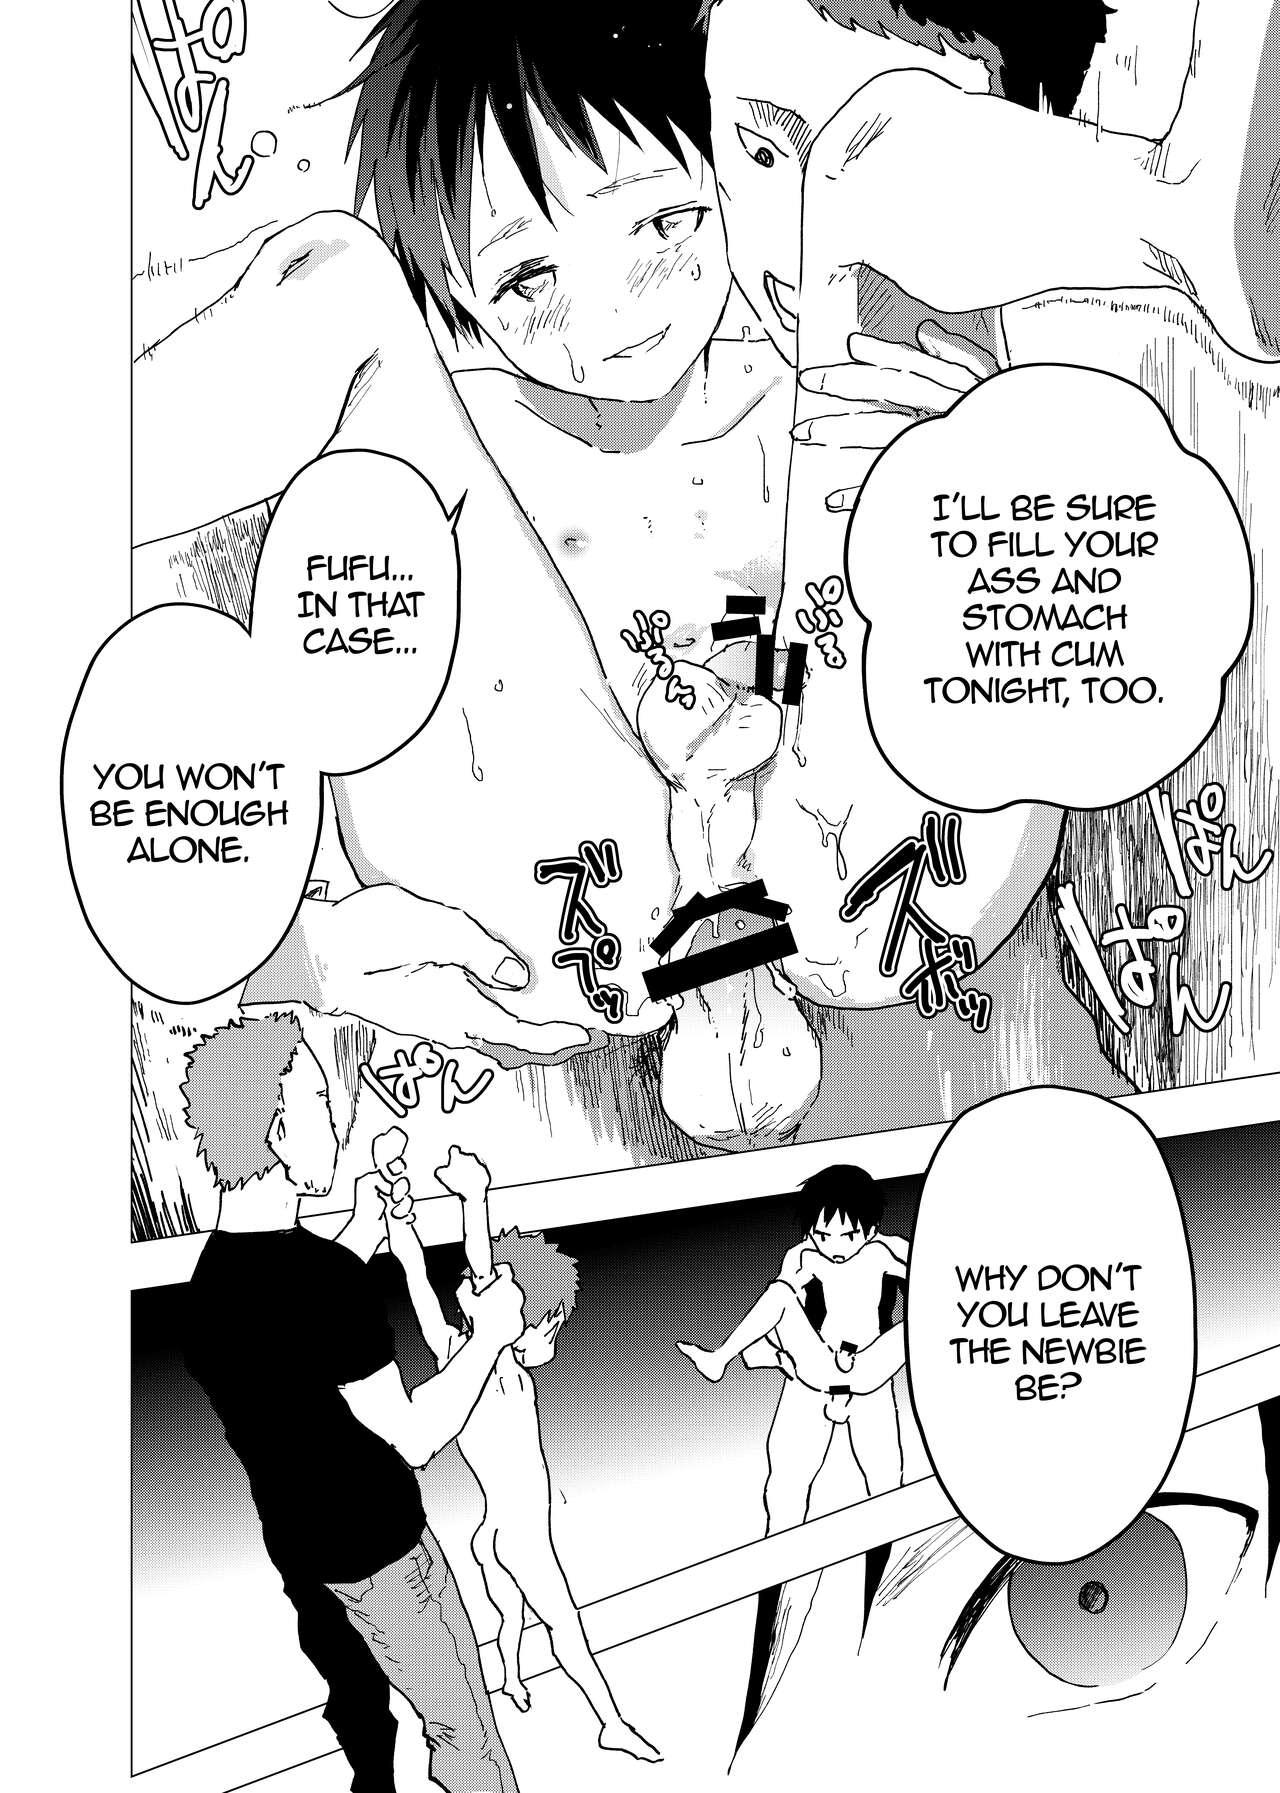 Ibasho ga Nai node Kamimachi shite mita Suterareta Shounen no Ero Manga Ch. 13 | A Dirty Manga About a Boy Who Got Abandoned and Is Waiting for Someone To Save Him Ch. 13 4